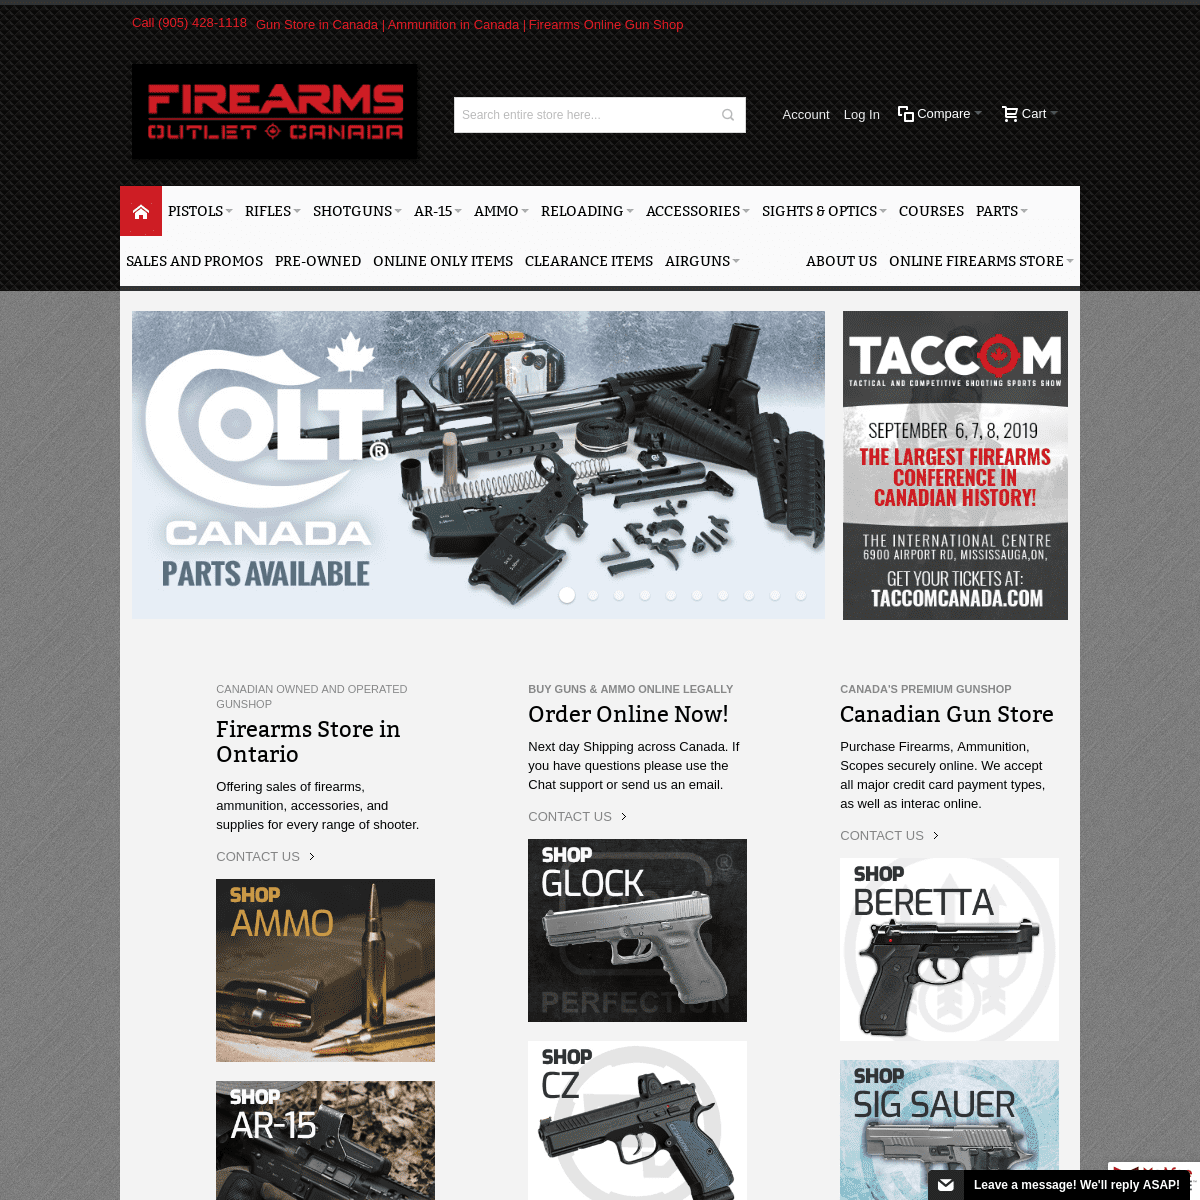 Firearms Outlet Canada - Online Ajax gun store